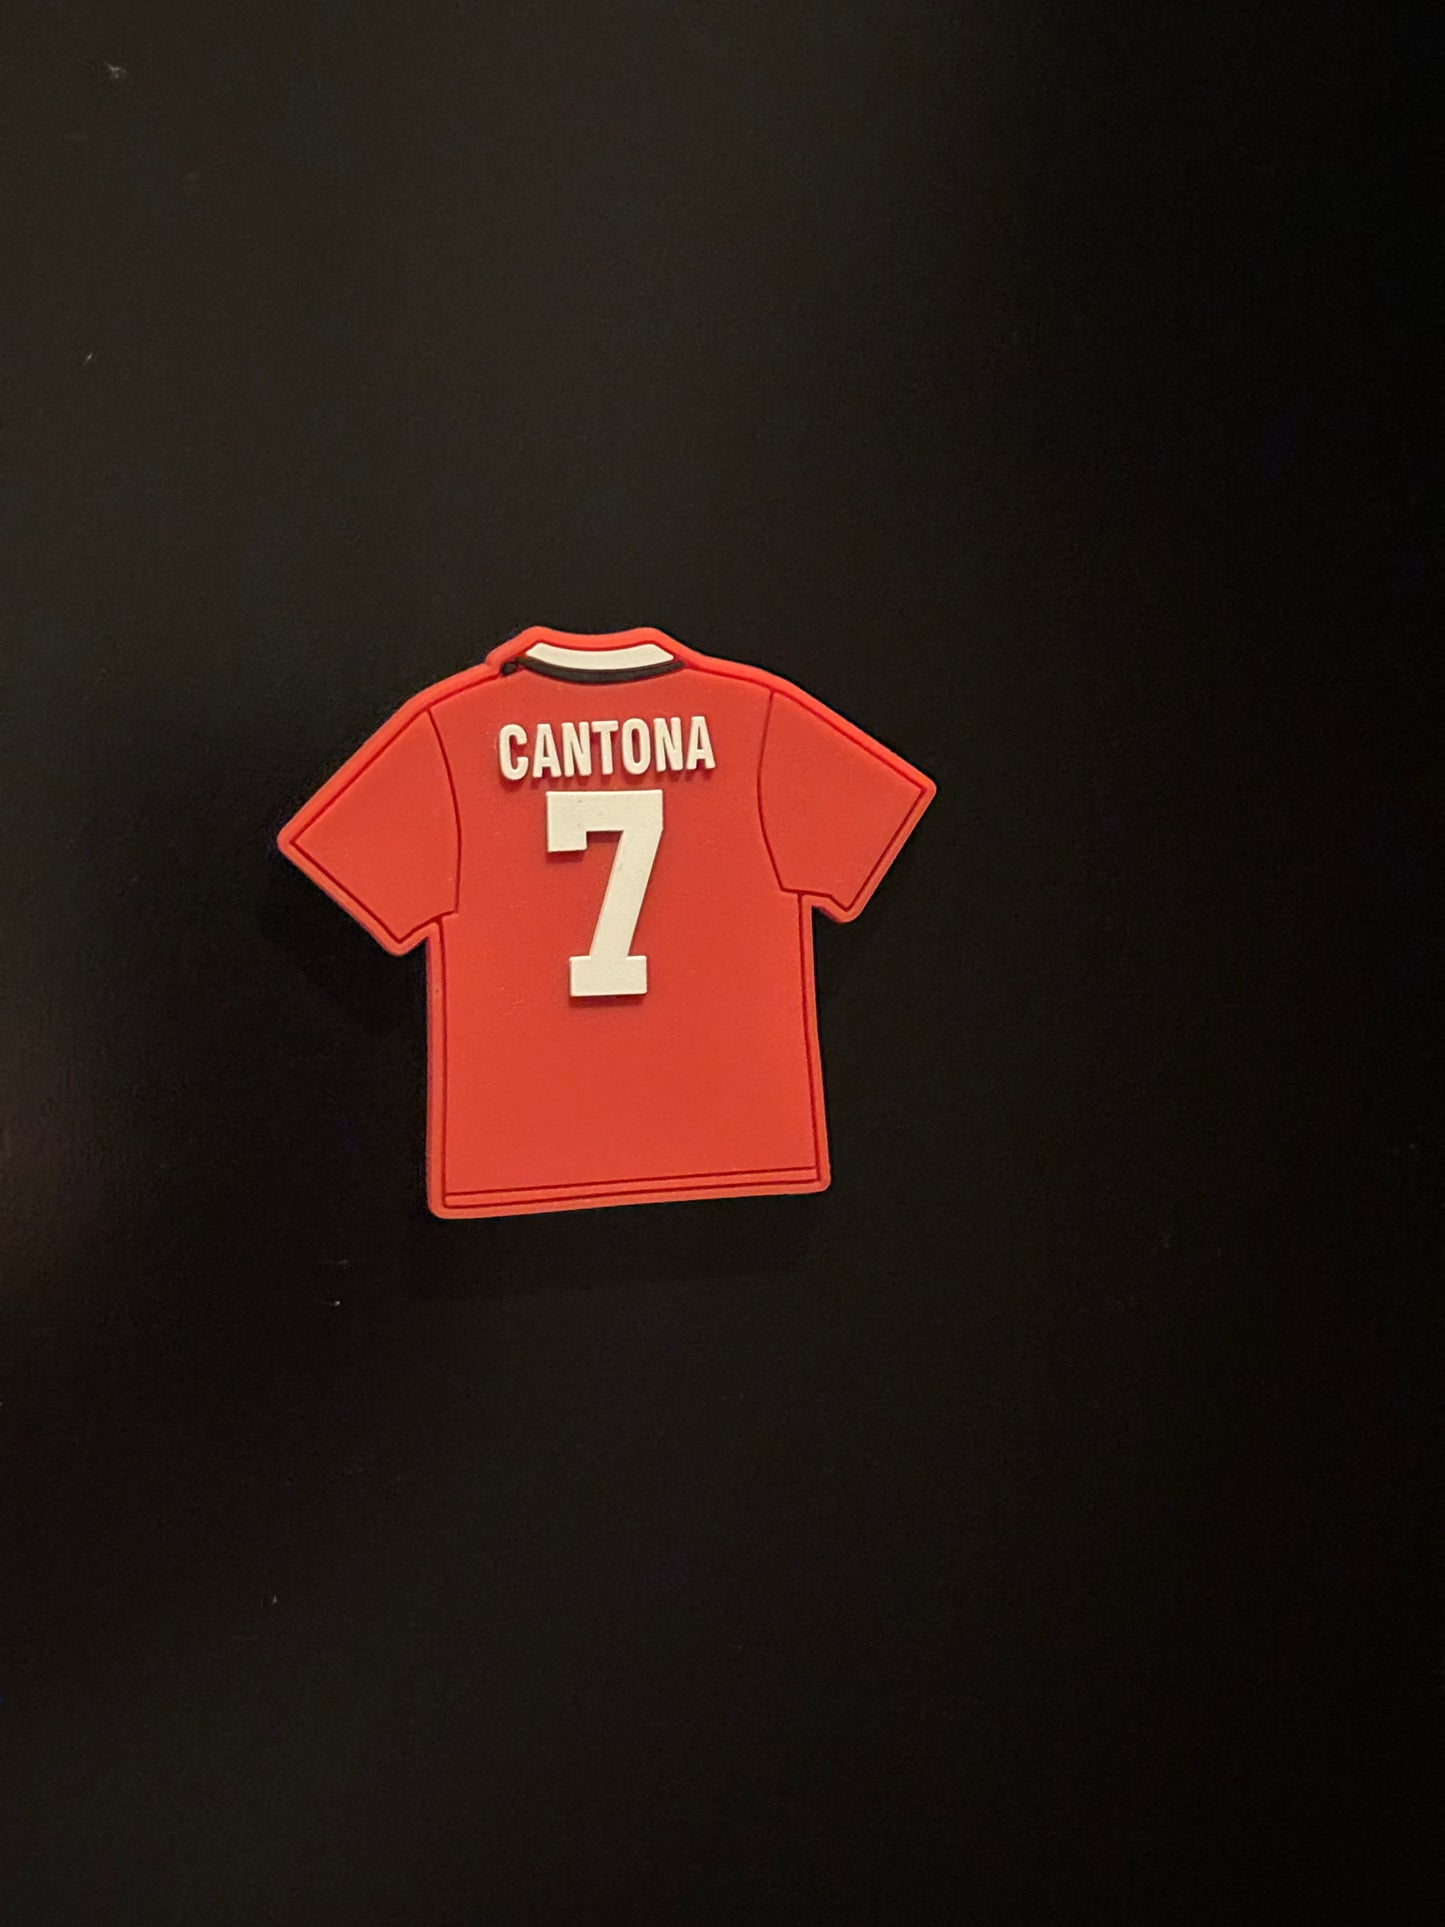 Cantona fridge magnet